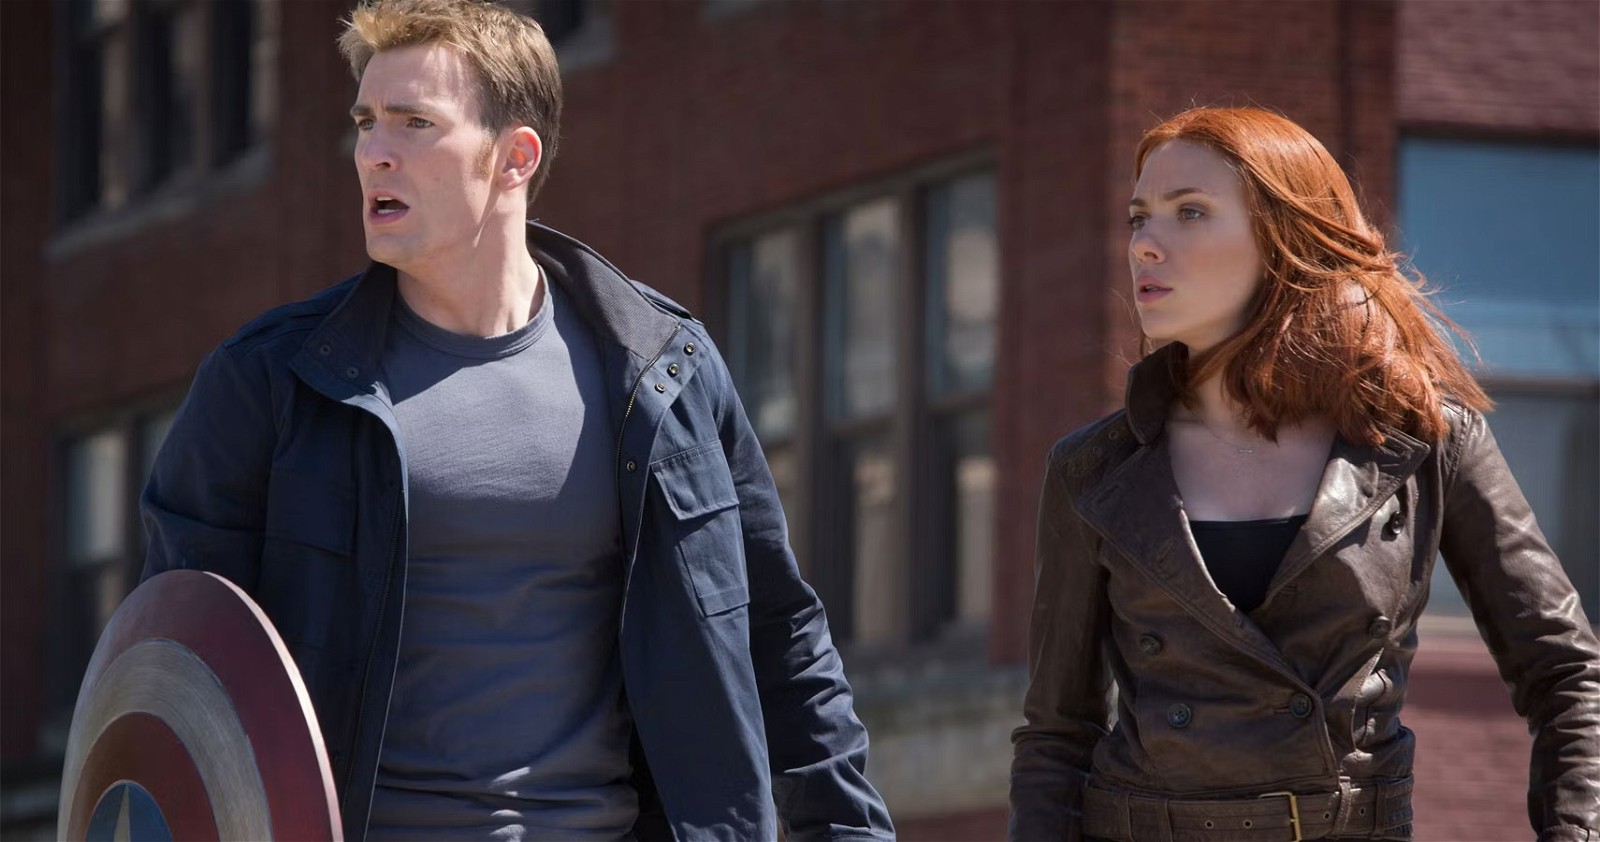 Chris Evans and Scarlett Johansson talked about Captain America's return.